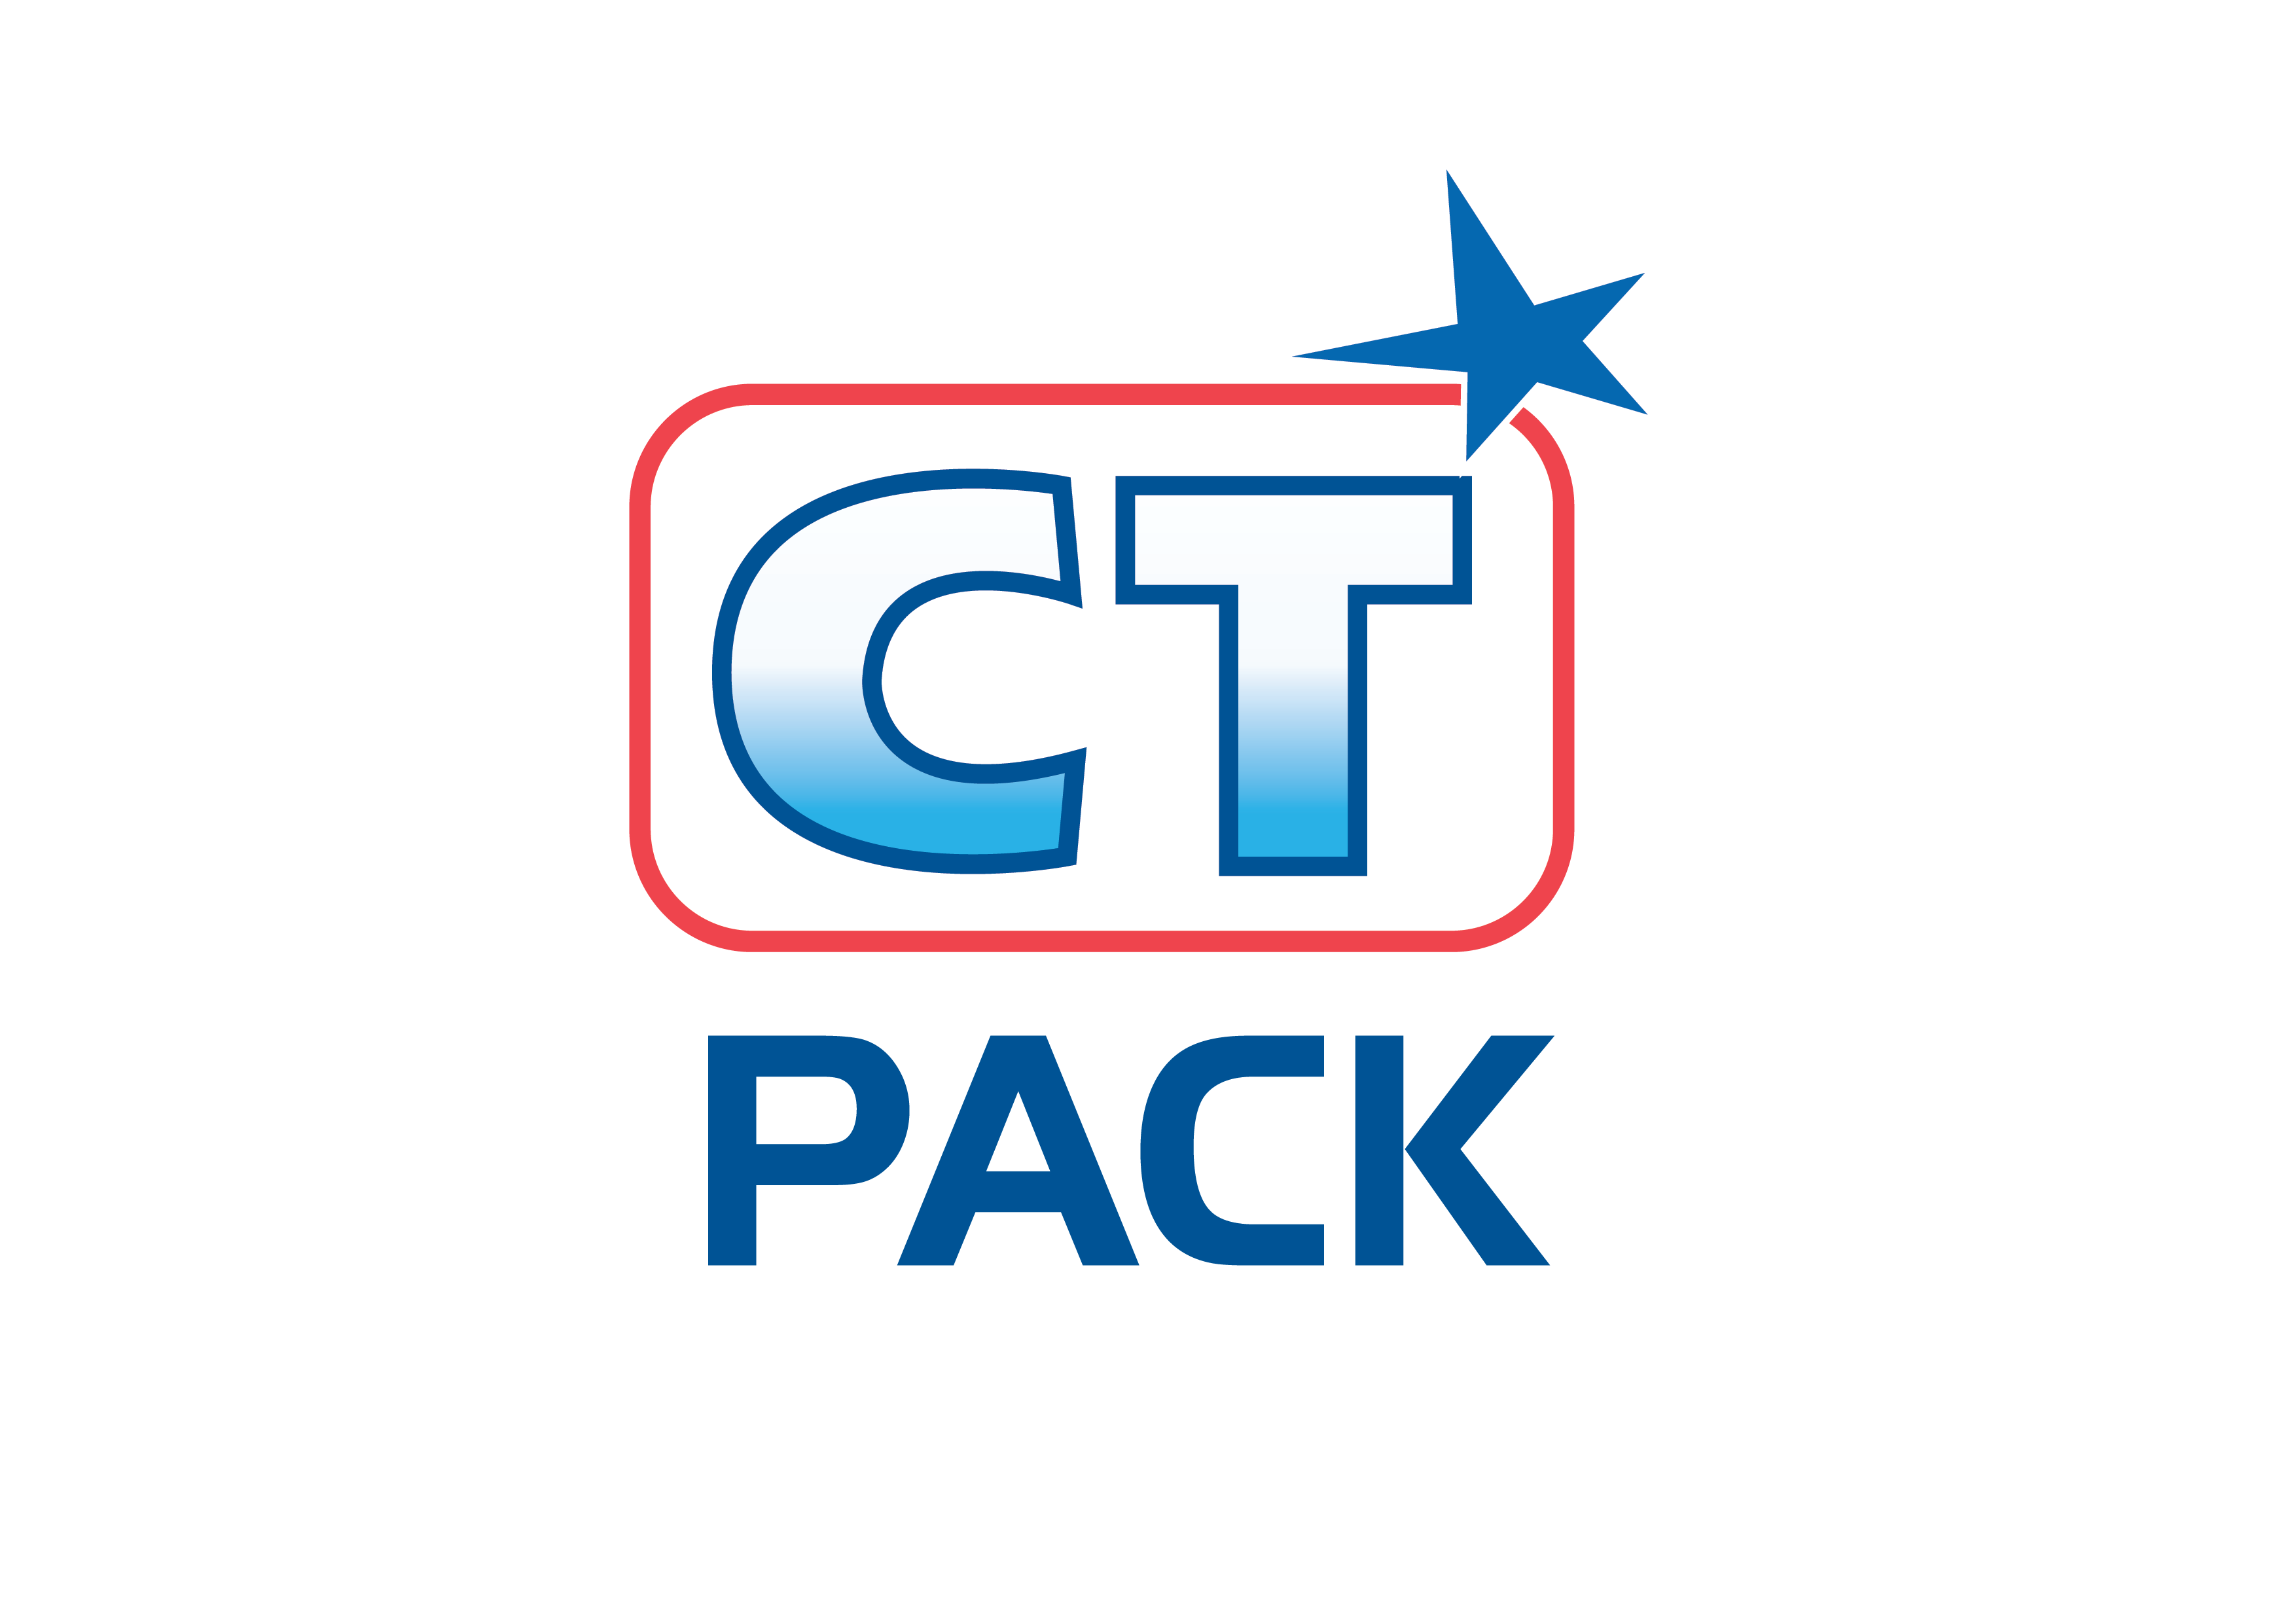 CT Pack